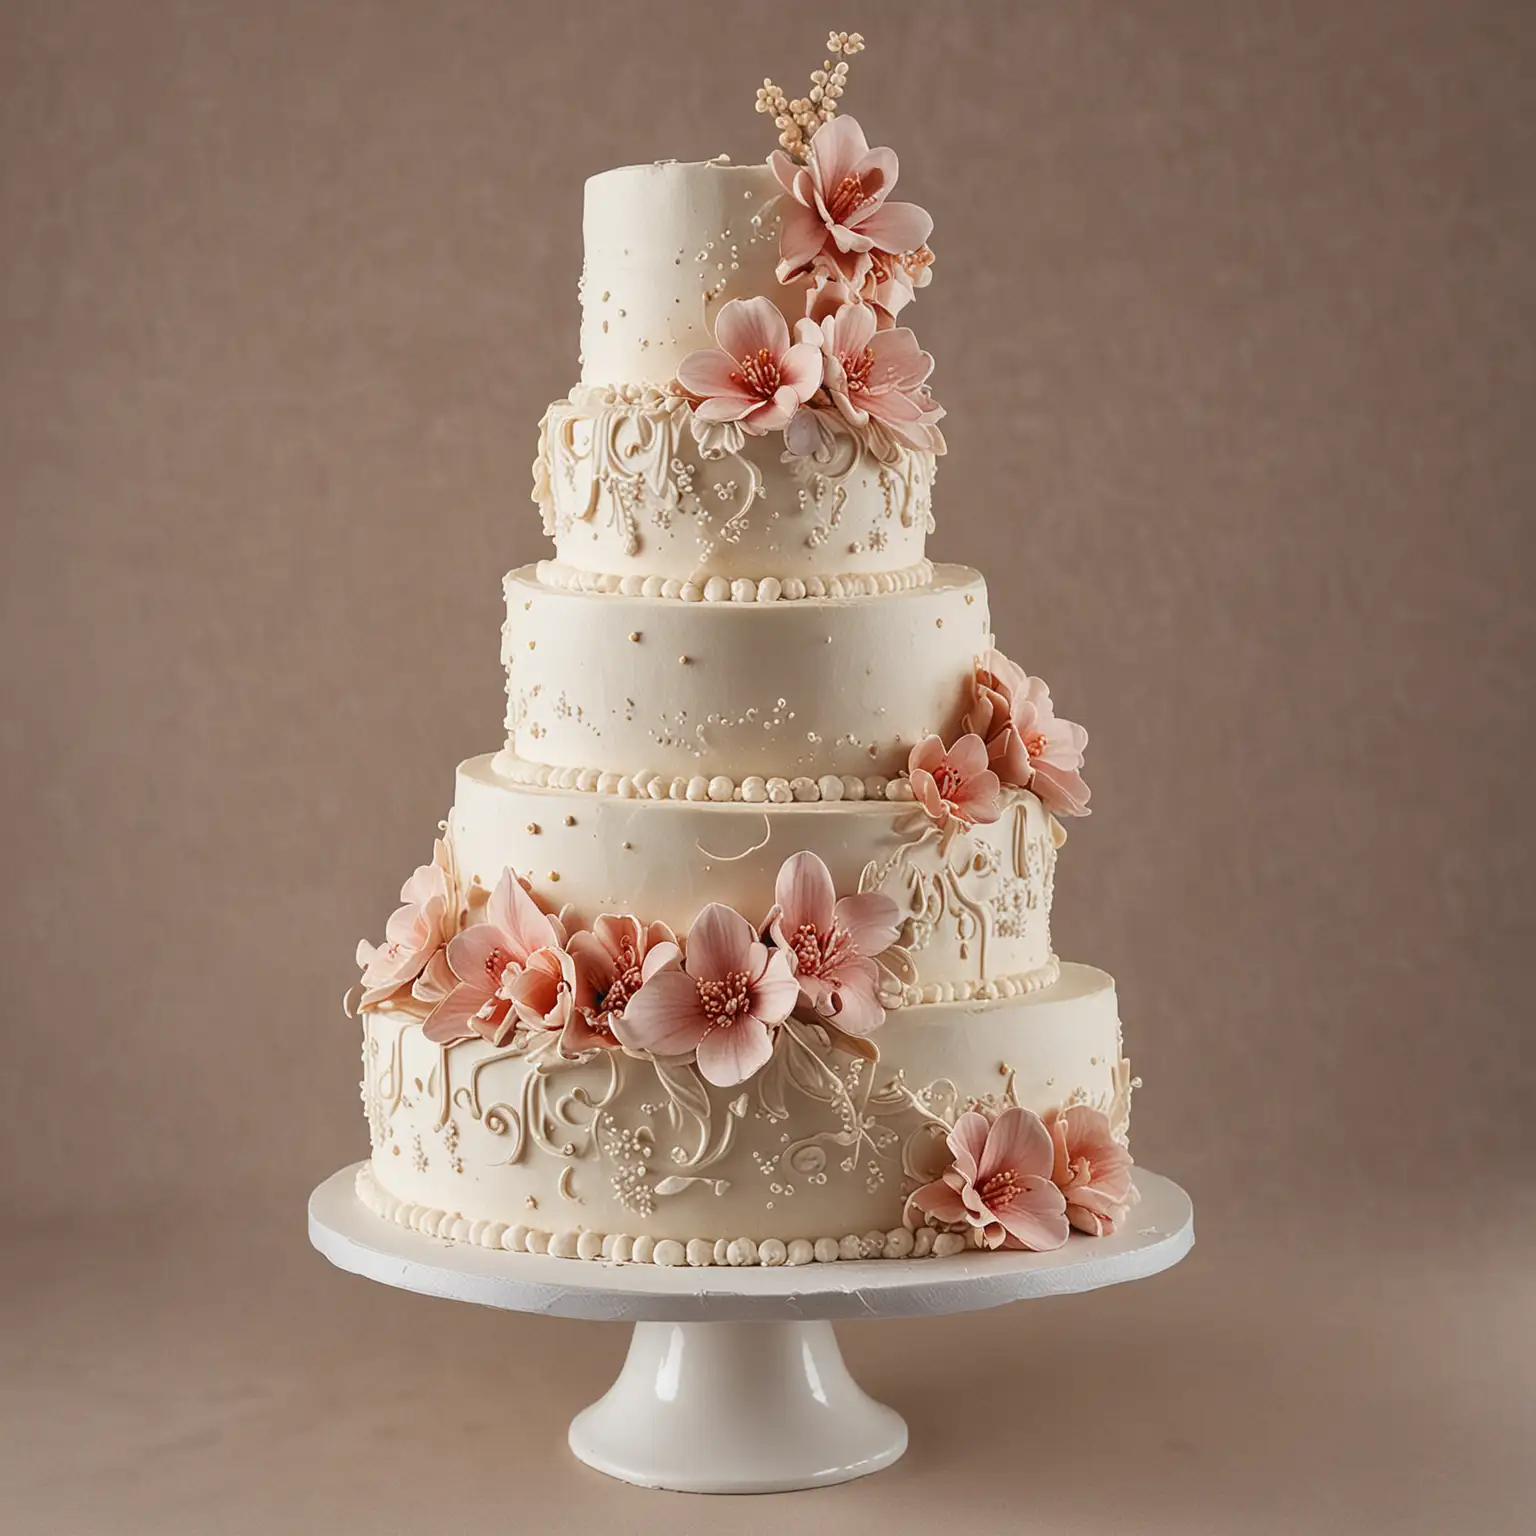 Elegant Wedding Cake with Intricate Fondant Details